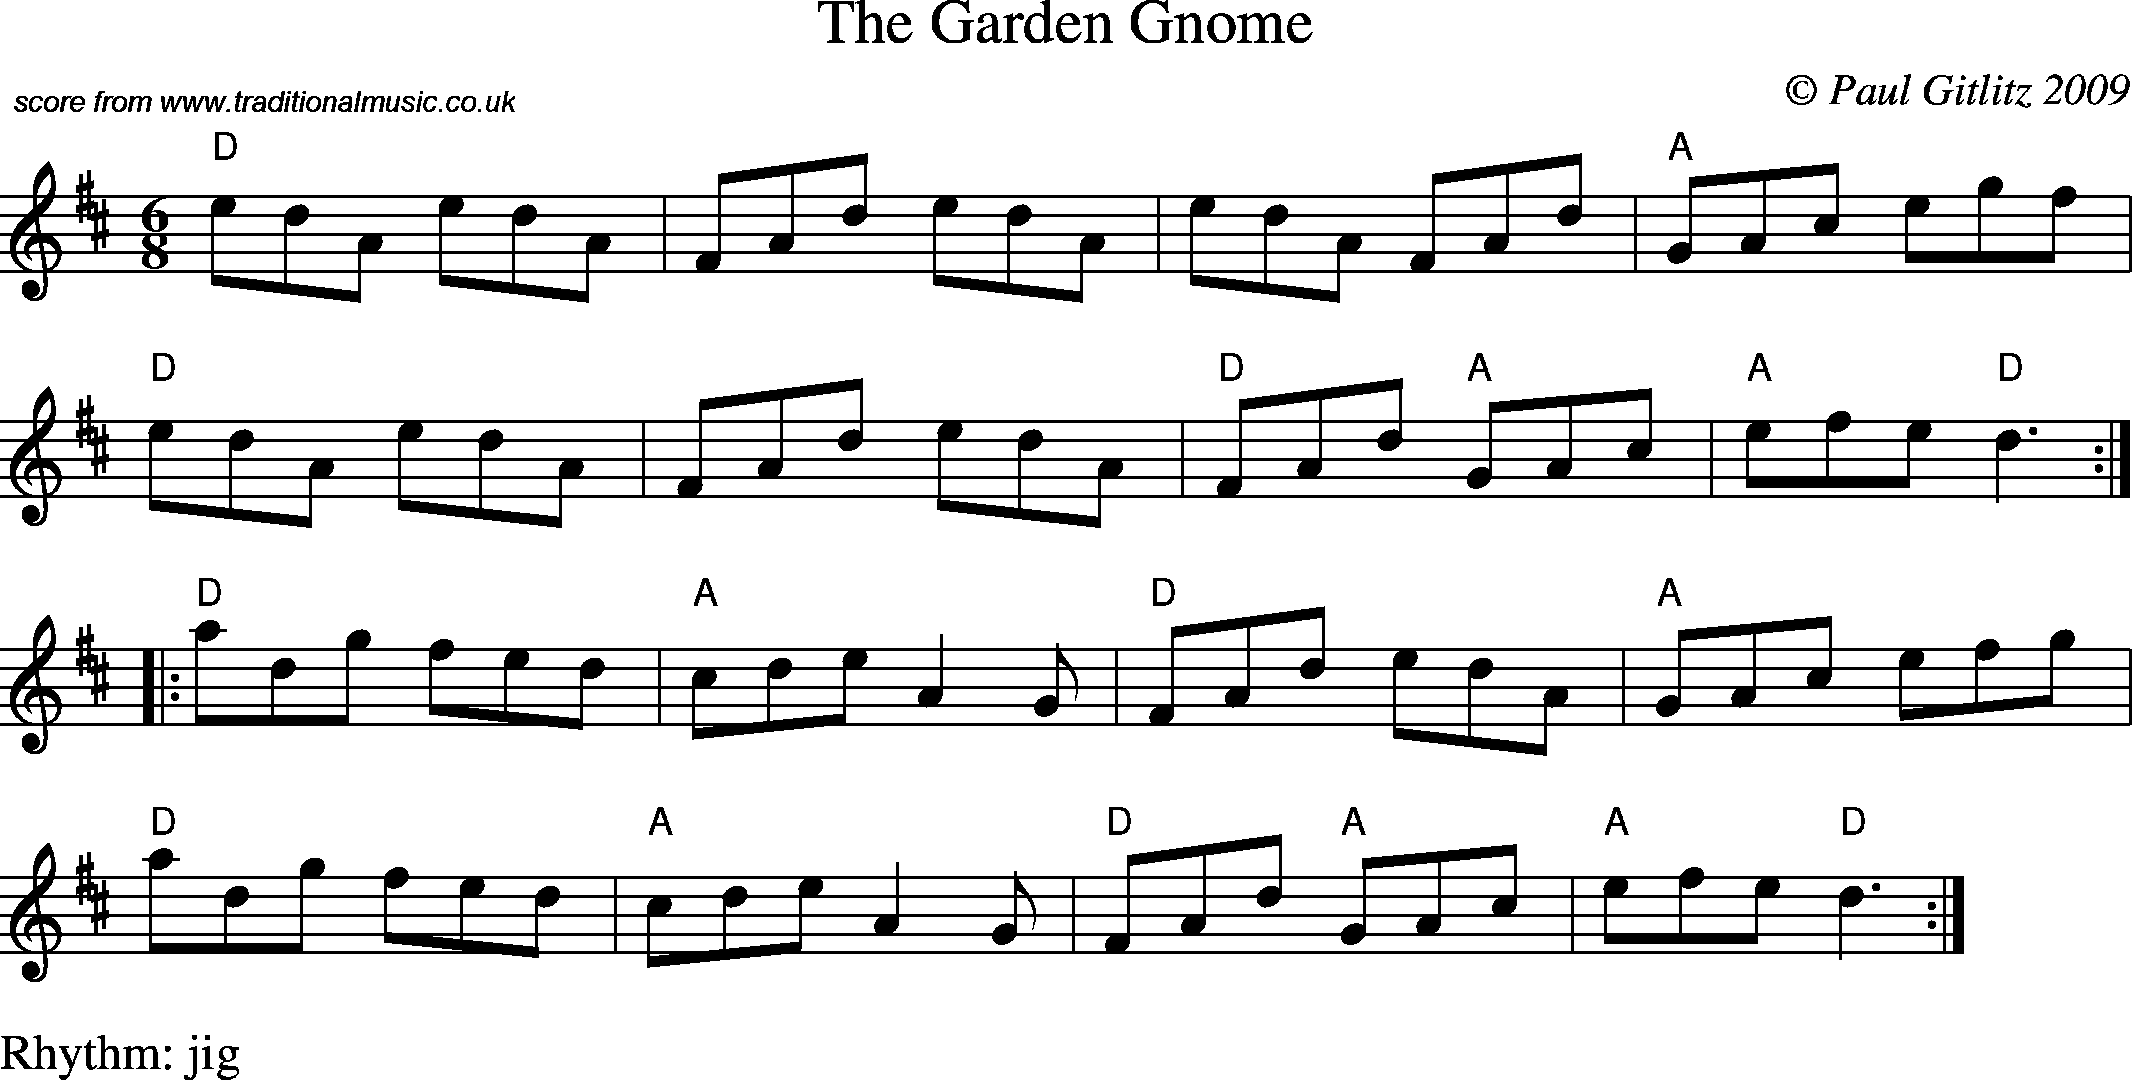 Sheet Music Score for Jig - Garden Gnome, The